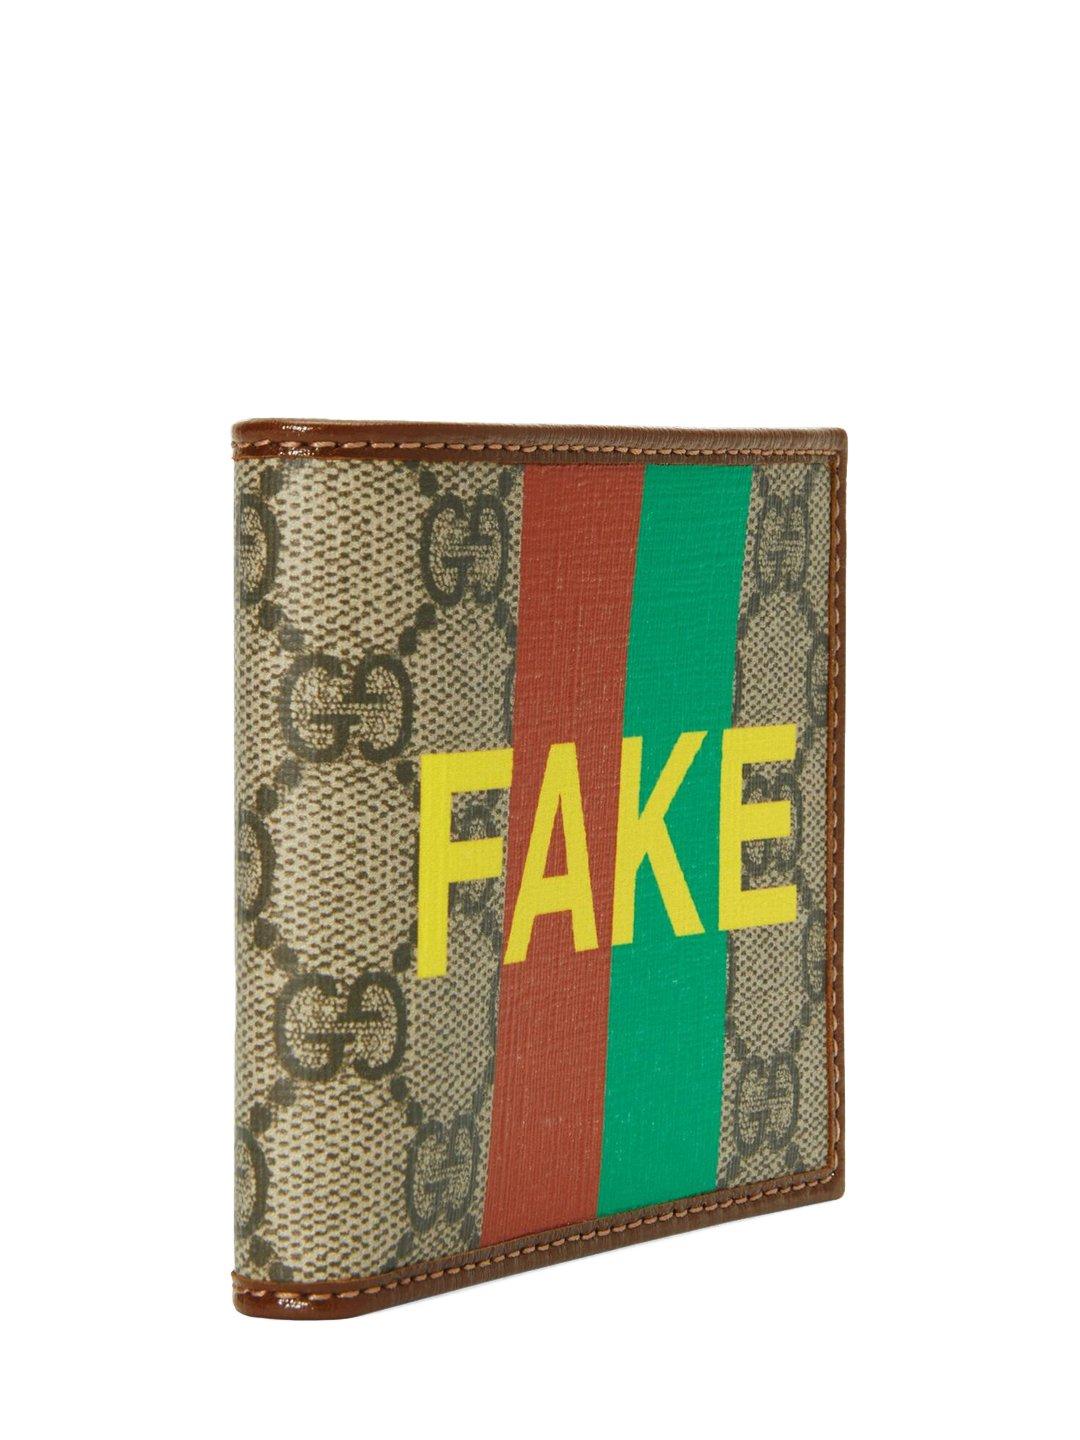 Gucci Not Fake Logo Wallet for Men | Lyst